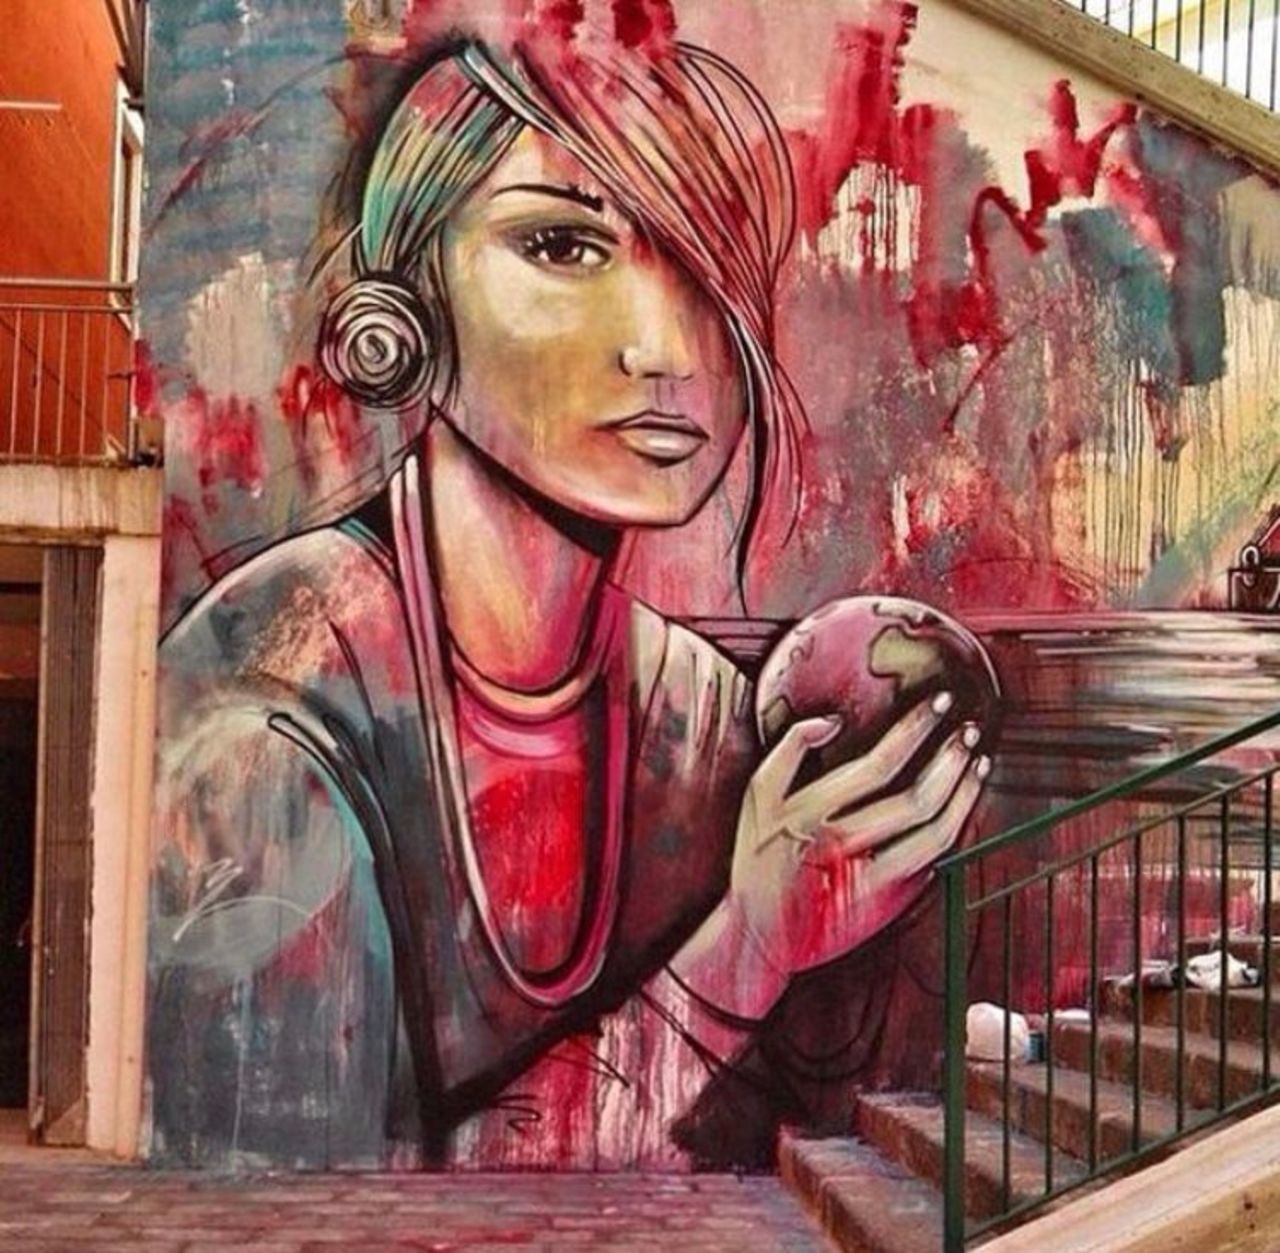 New work by Alice Pasquini #streetart #mural #graffiti #art https://t.co/j1r1izRFNq